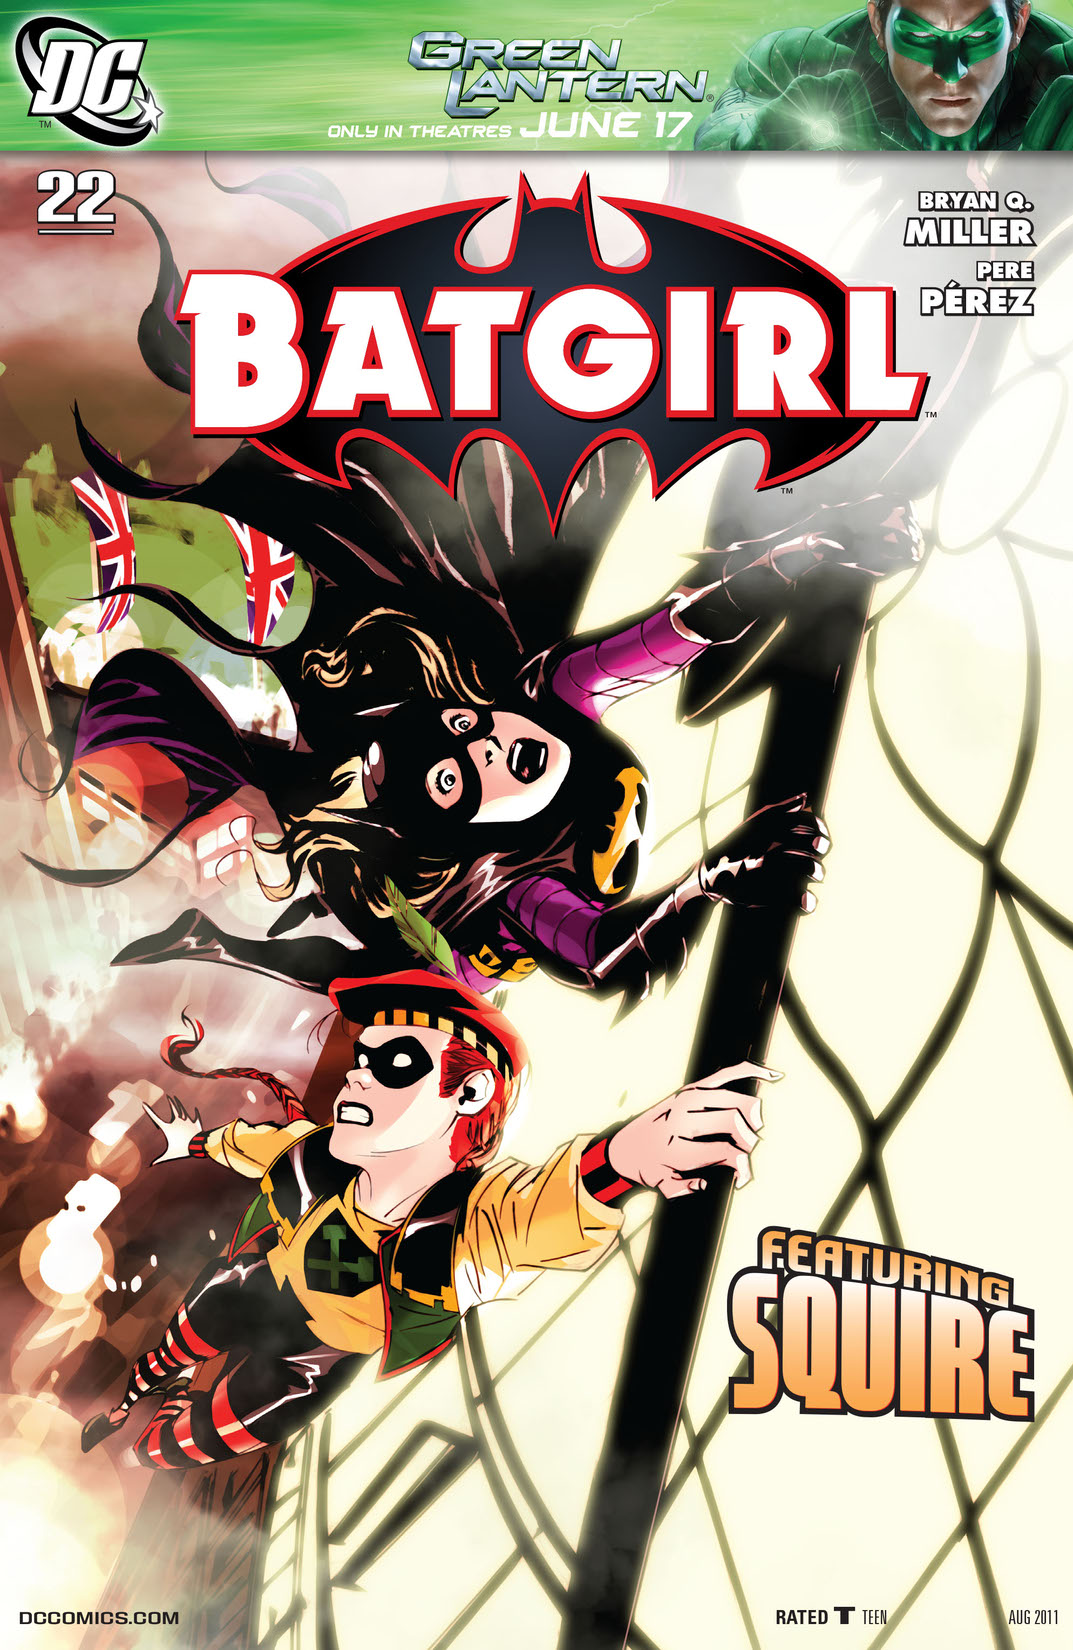 Batgirl (2009-) #22 preview images